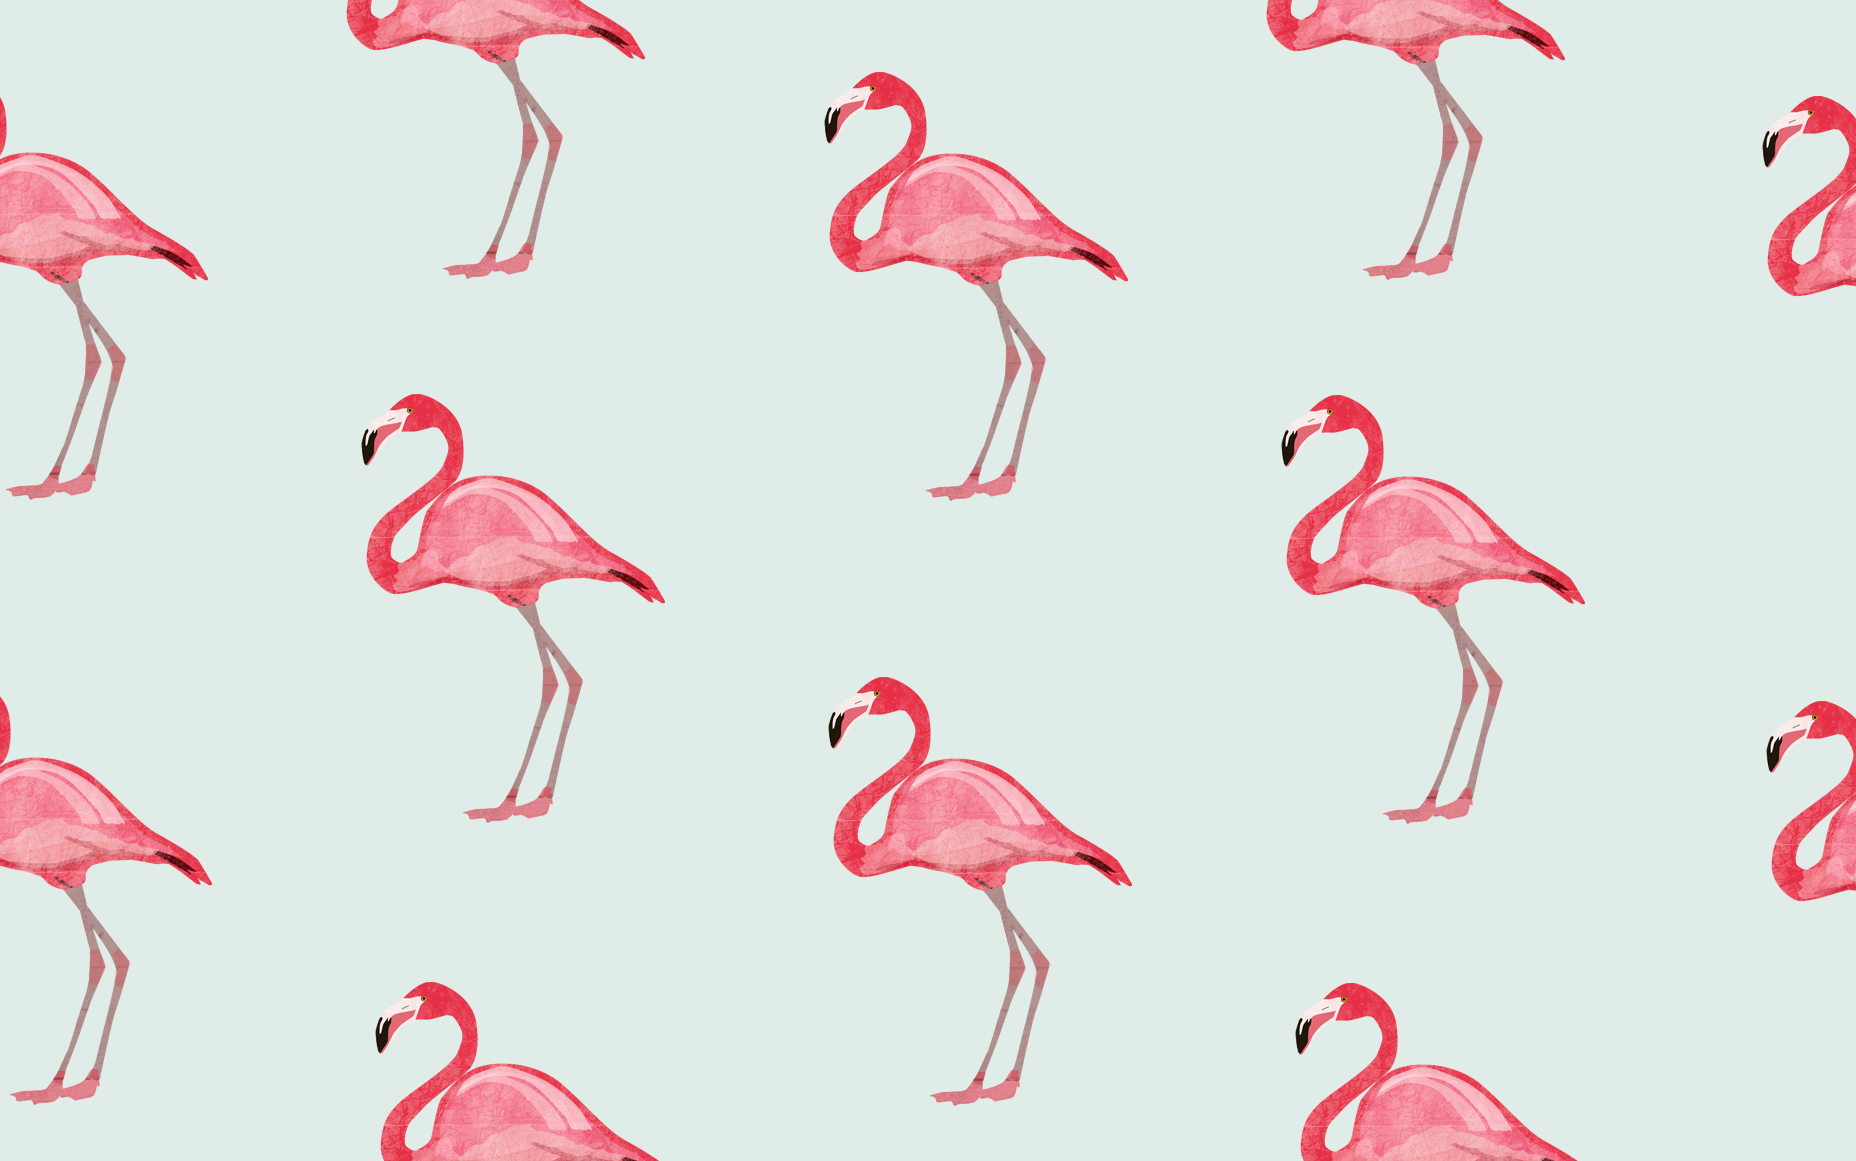 Red Flamingo Desktop Wallpaper Hd For Mobile Phones And Laptop   Wallpapers13com